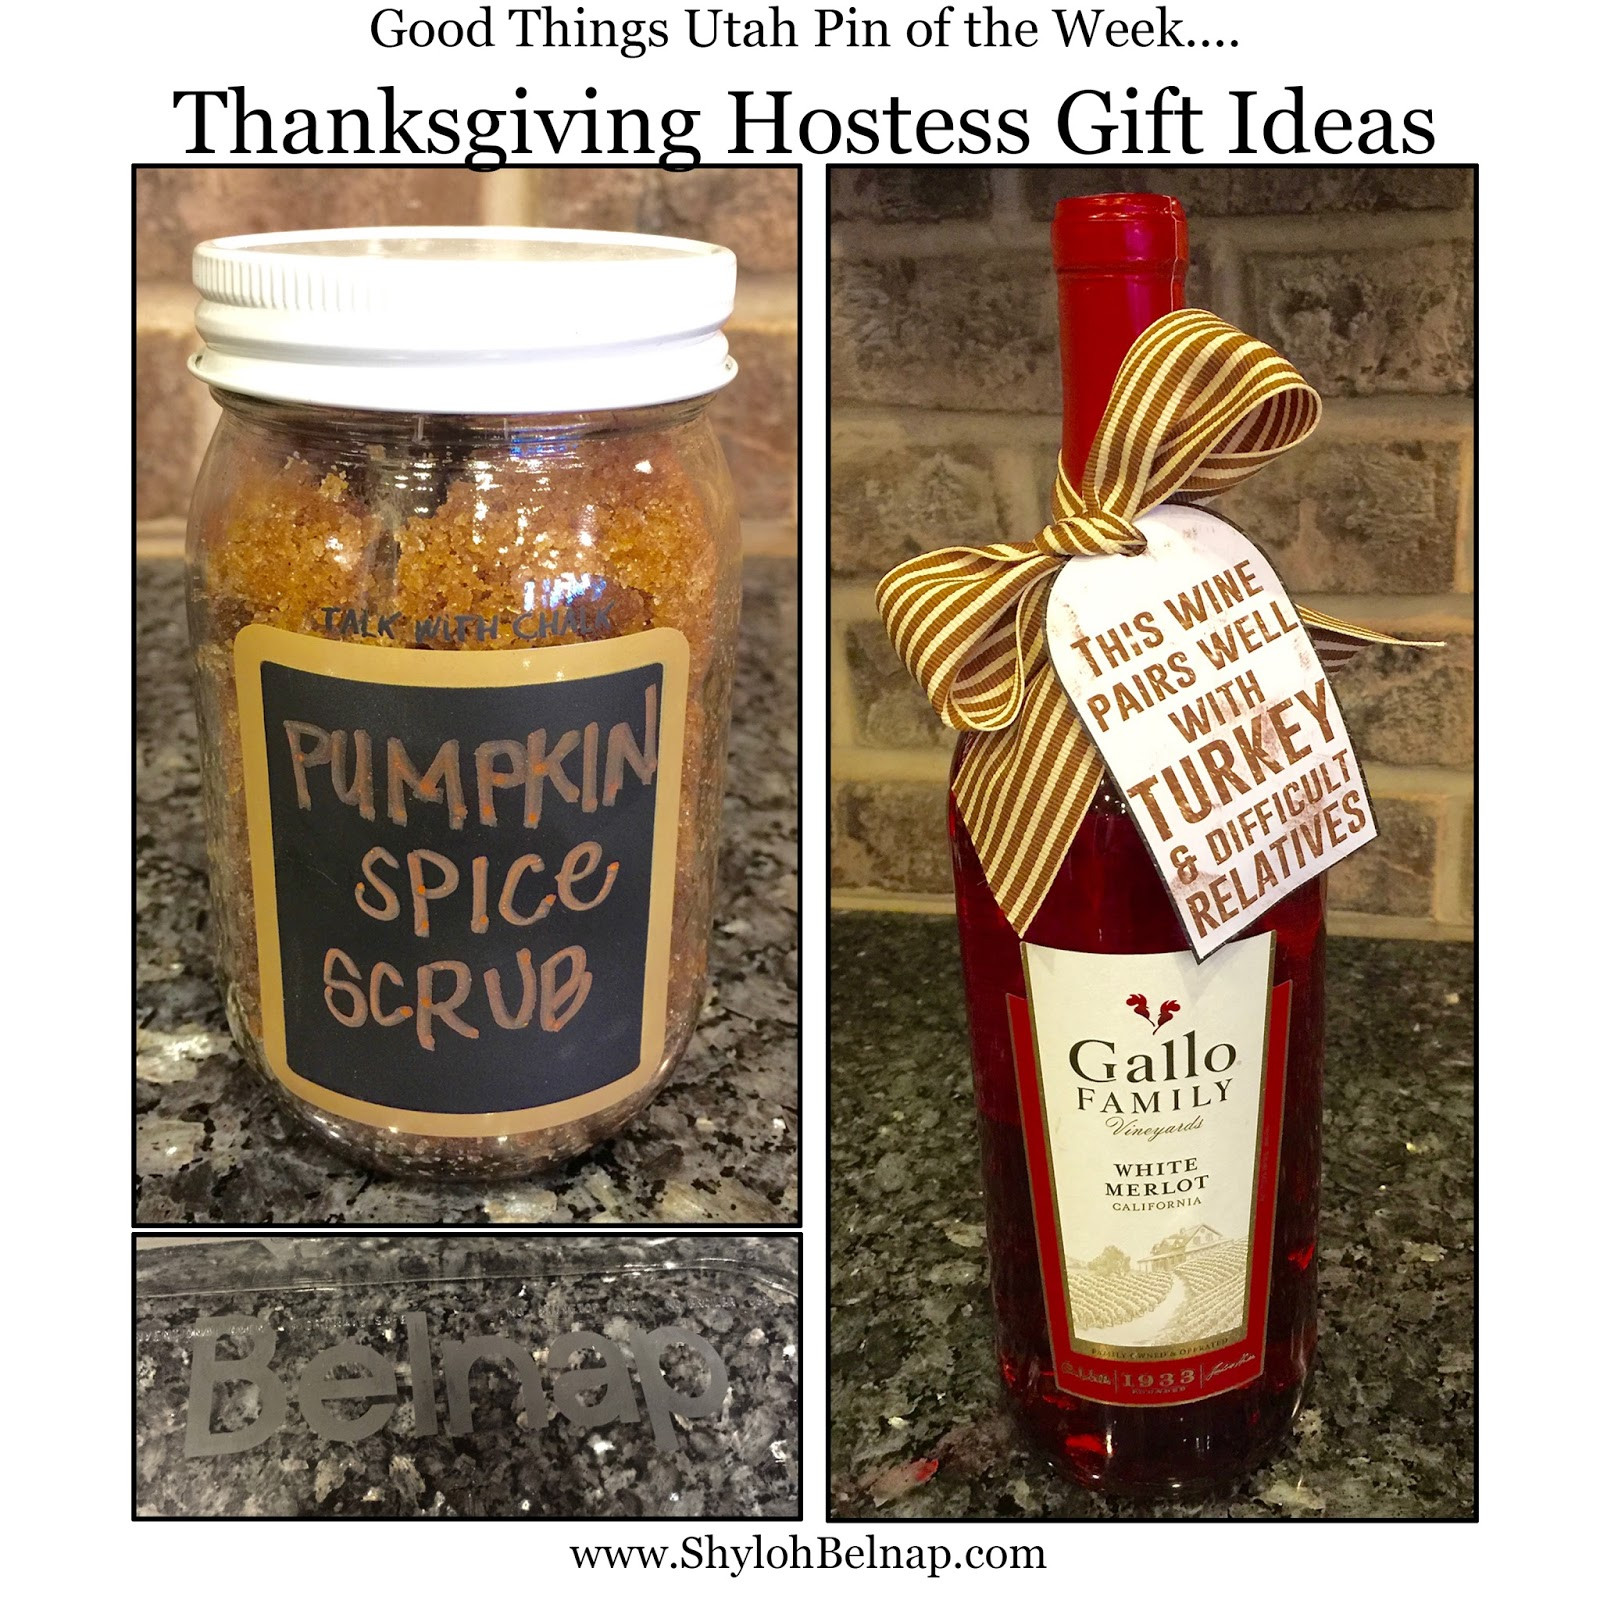 Thanksgiving Hostess Gift Ideas
 Shyloh Belnap Thanksgiving Hostess Gift Ideas